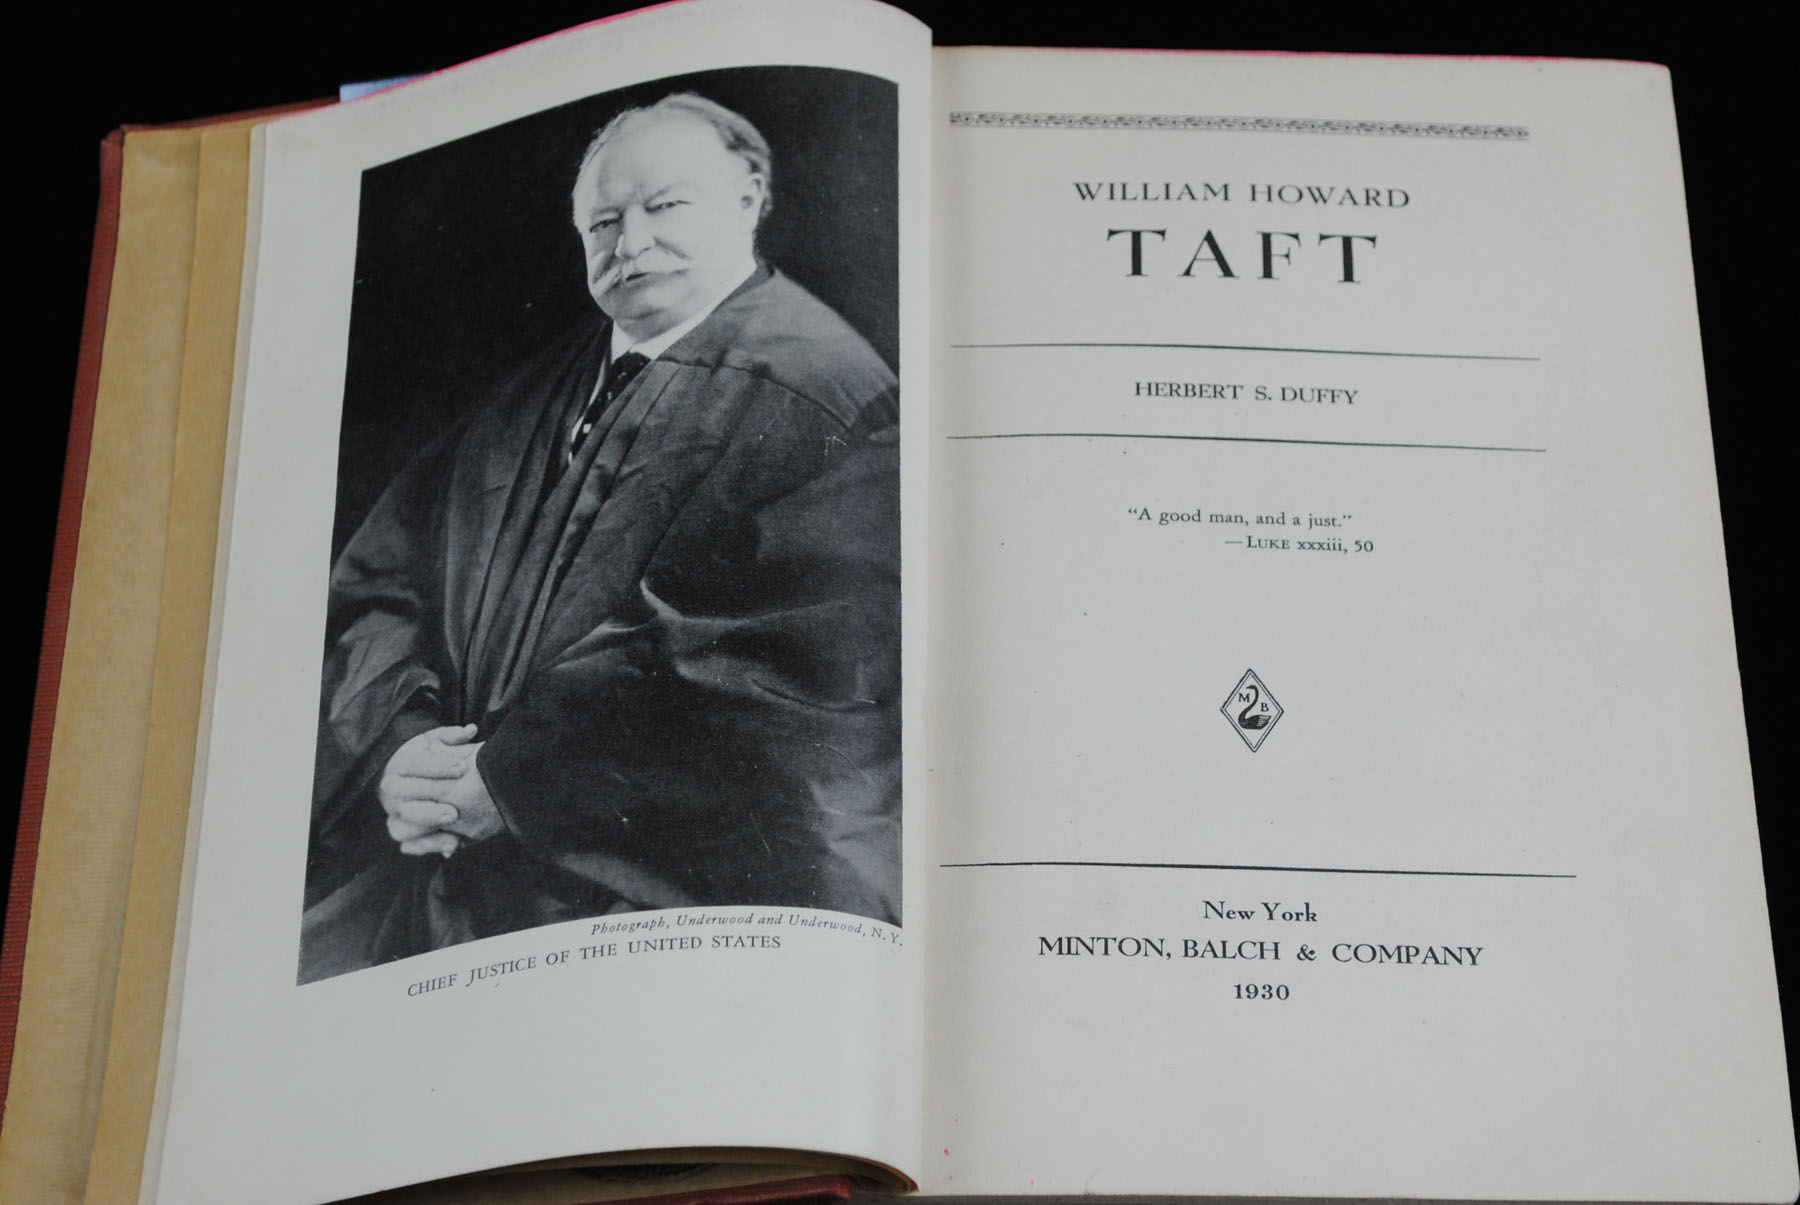 “William Howard Taft,” by Attorney General Herbert S. Duffy  